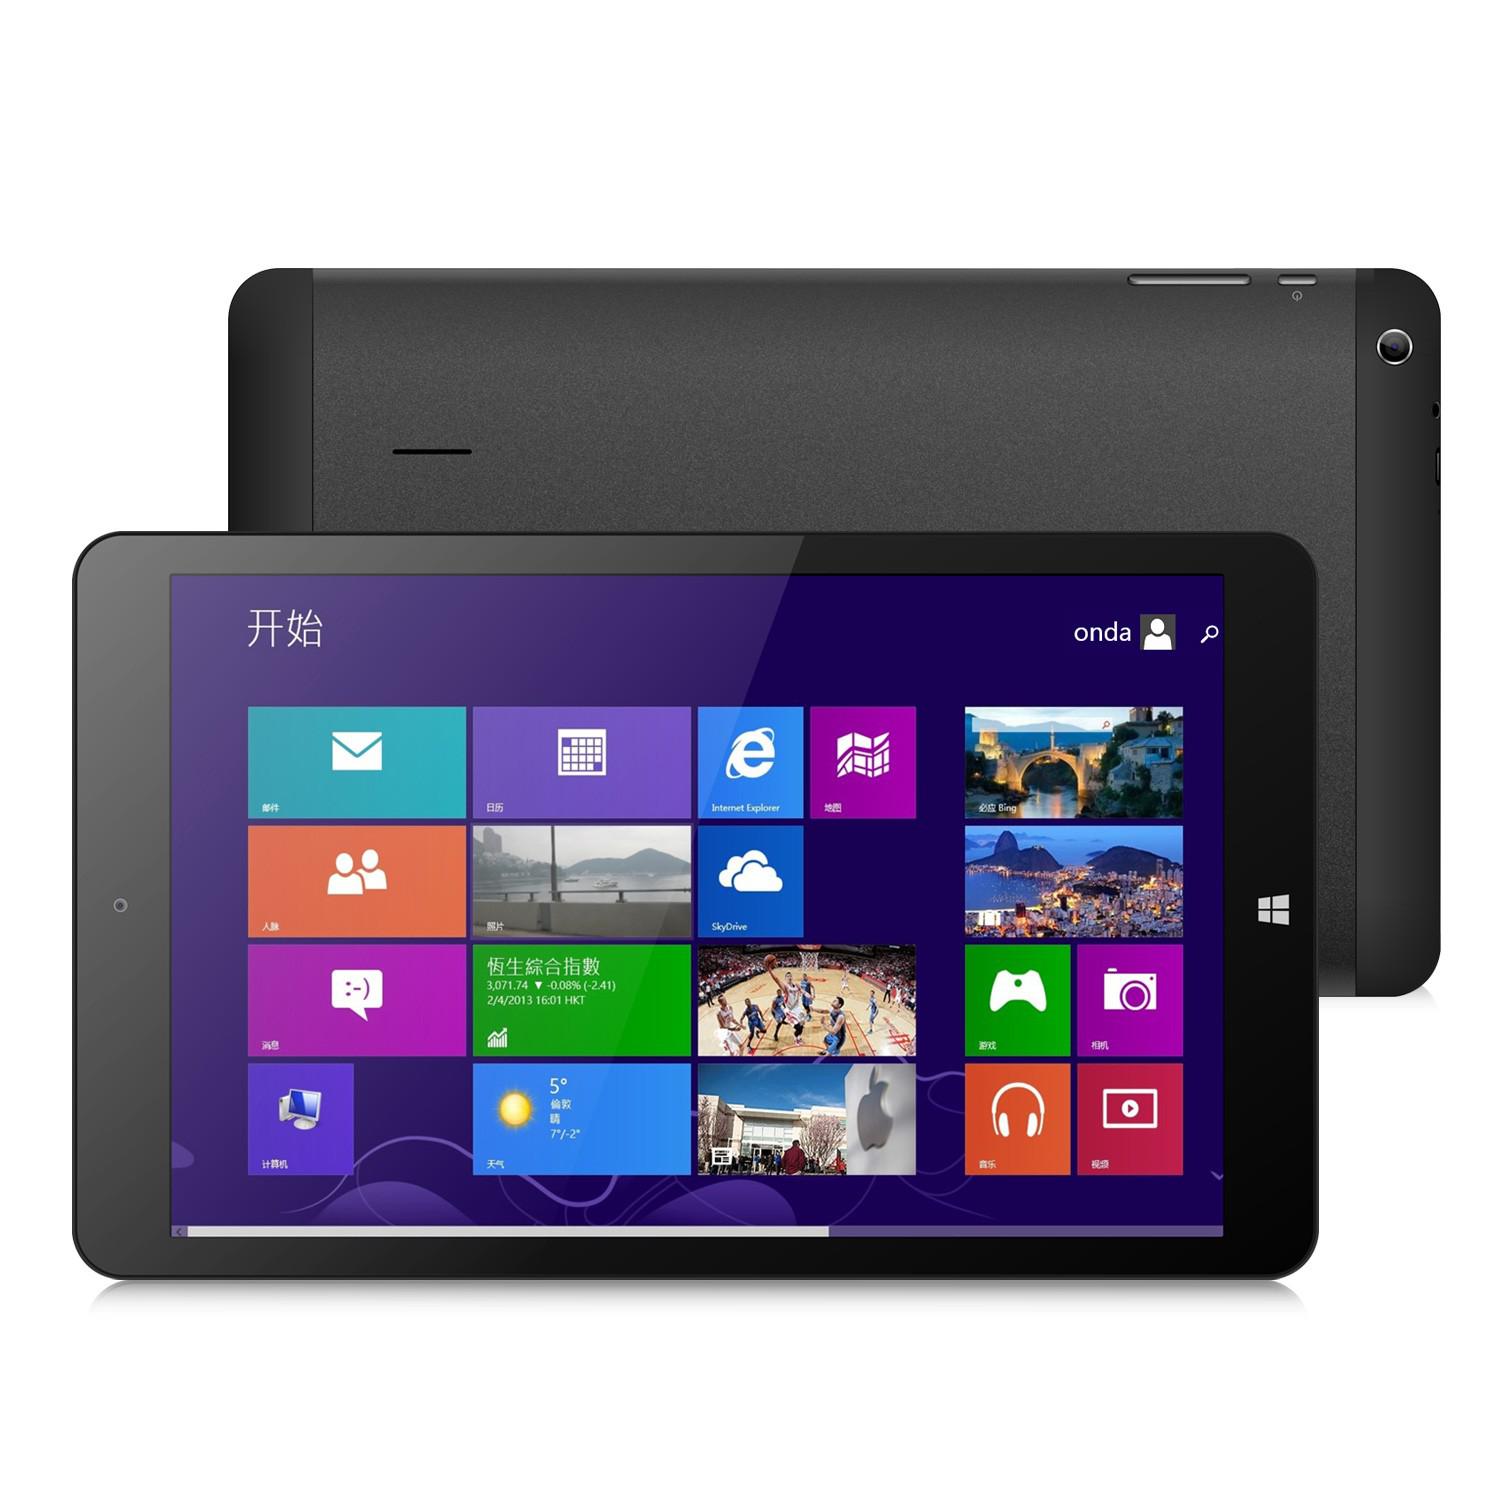 Onda V961w Quad Core 3G Win 8 Tablet 9.6 Inch IPS Screen Quad Core 4K Bluetooth GPS